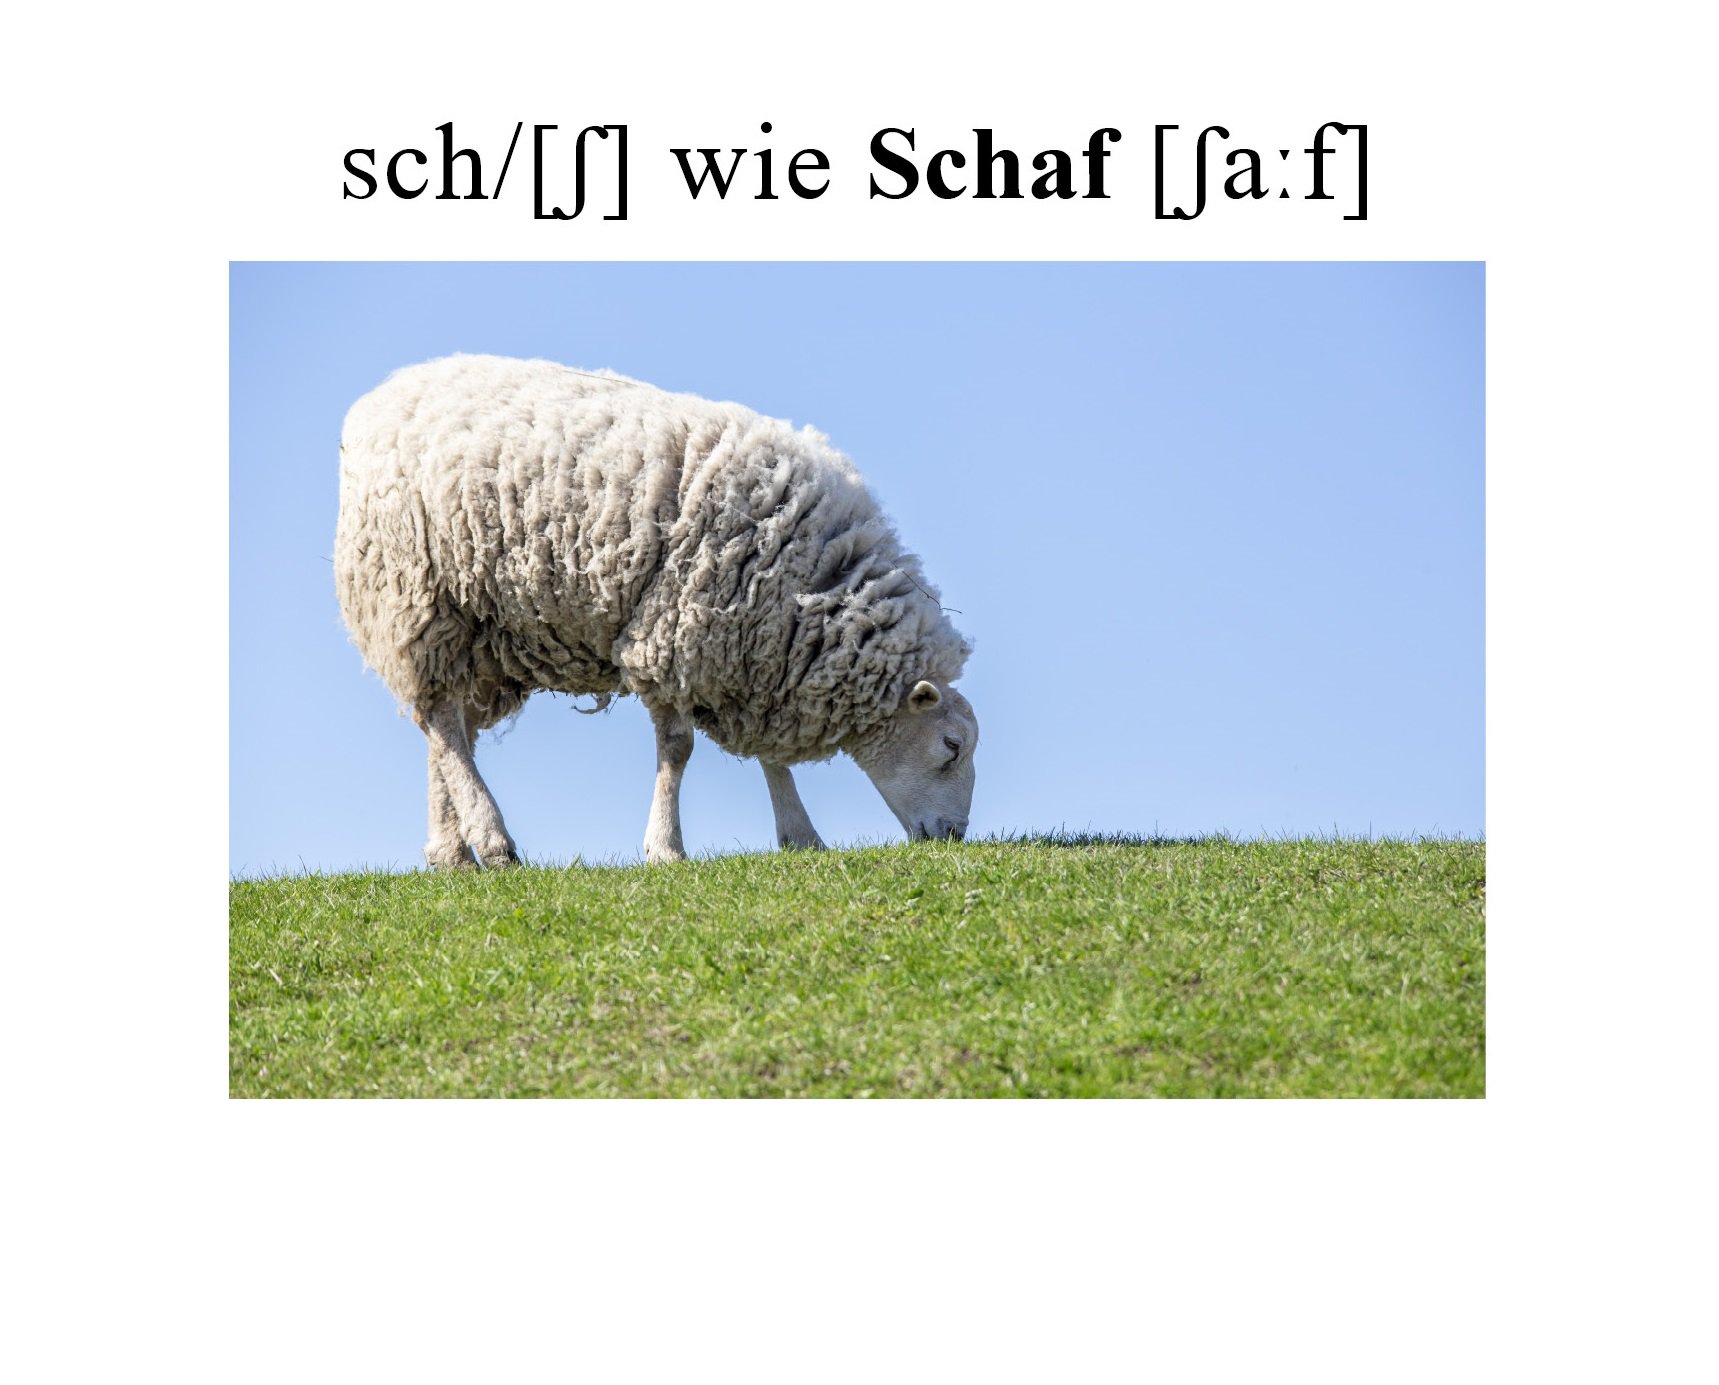 Schaf